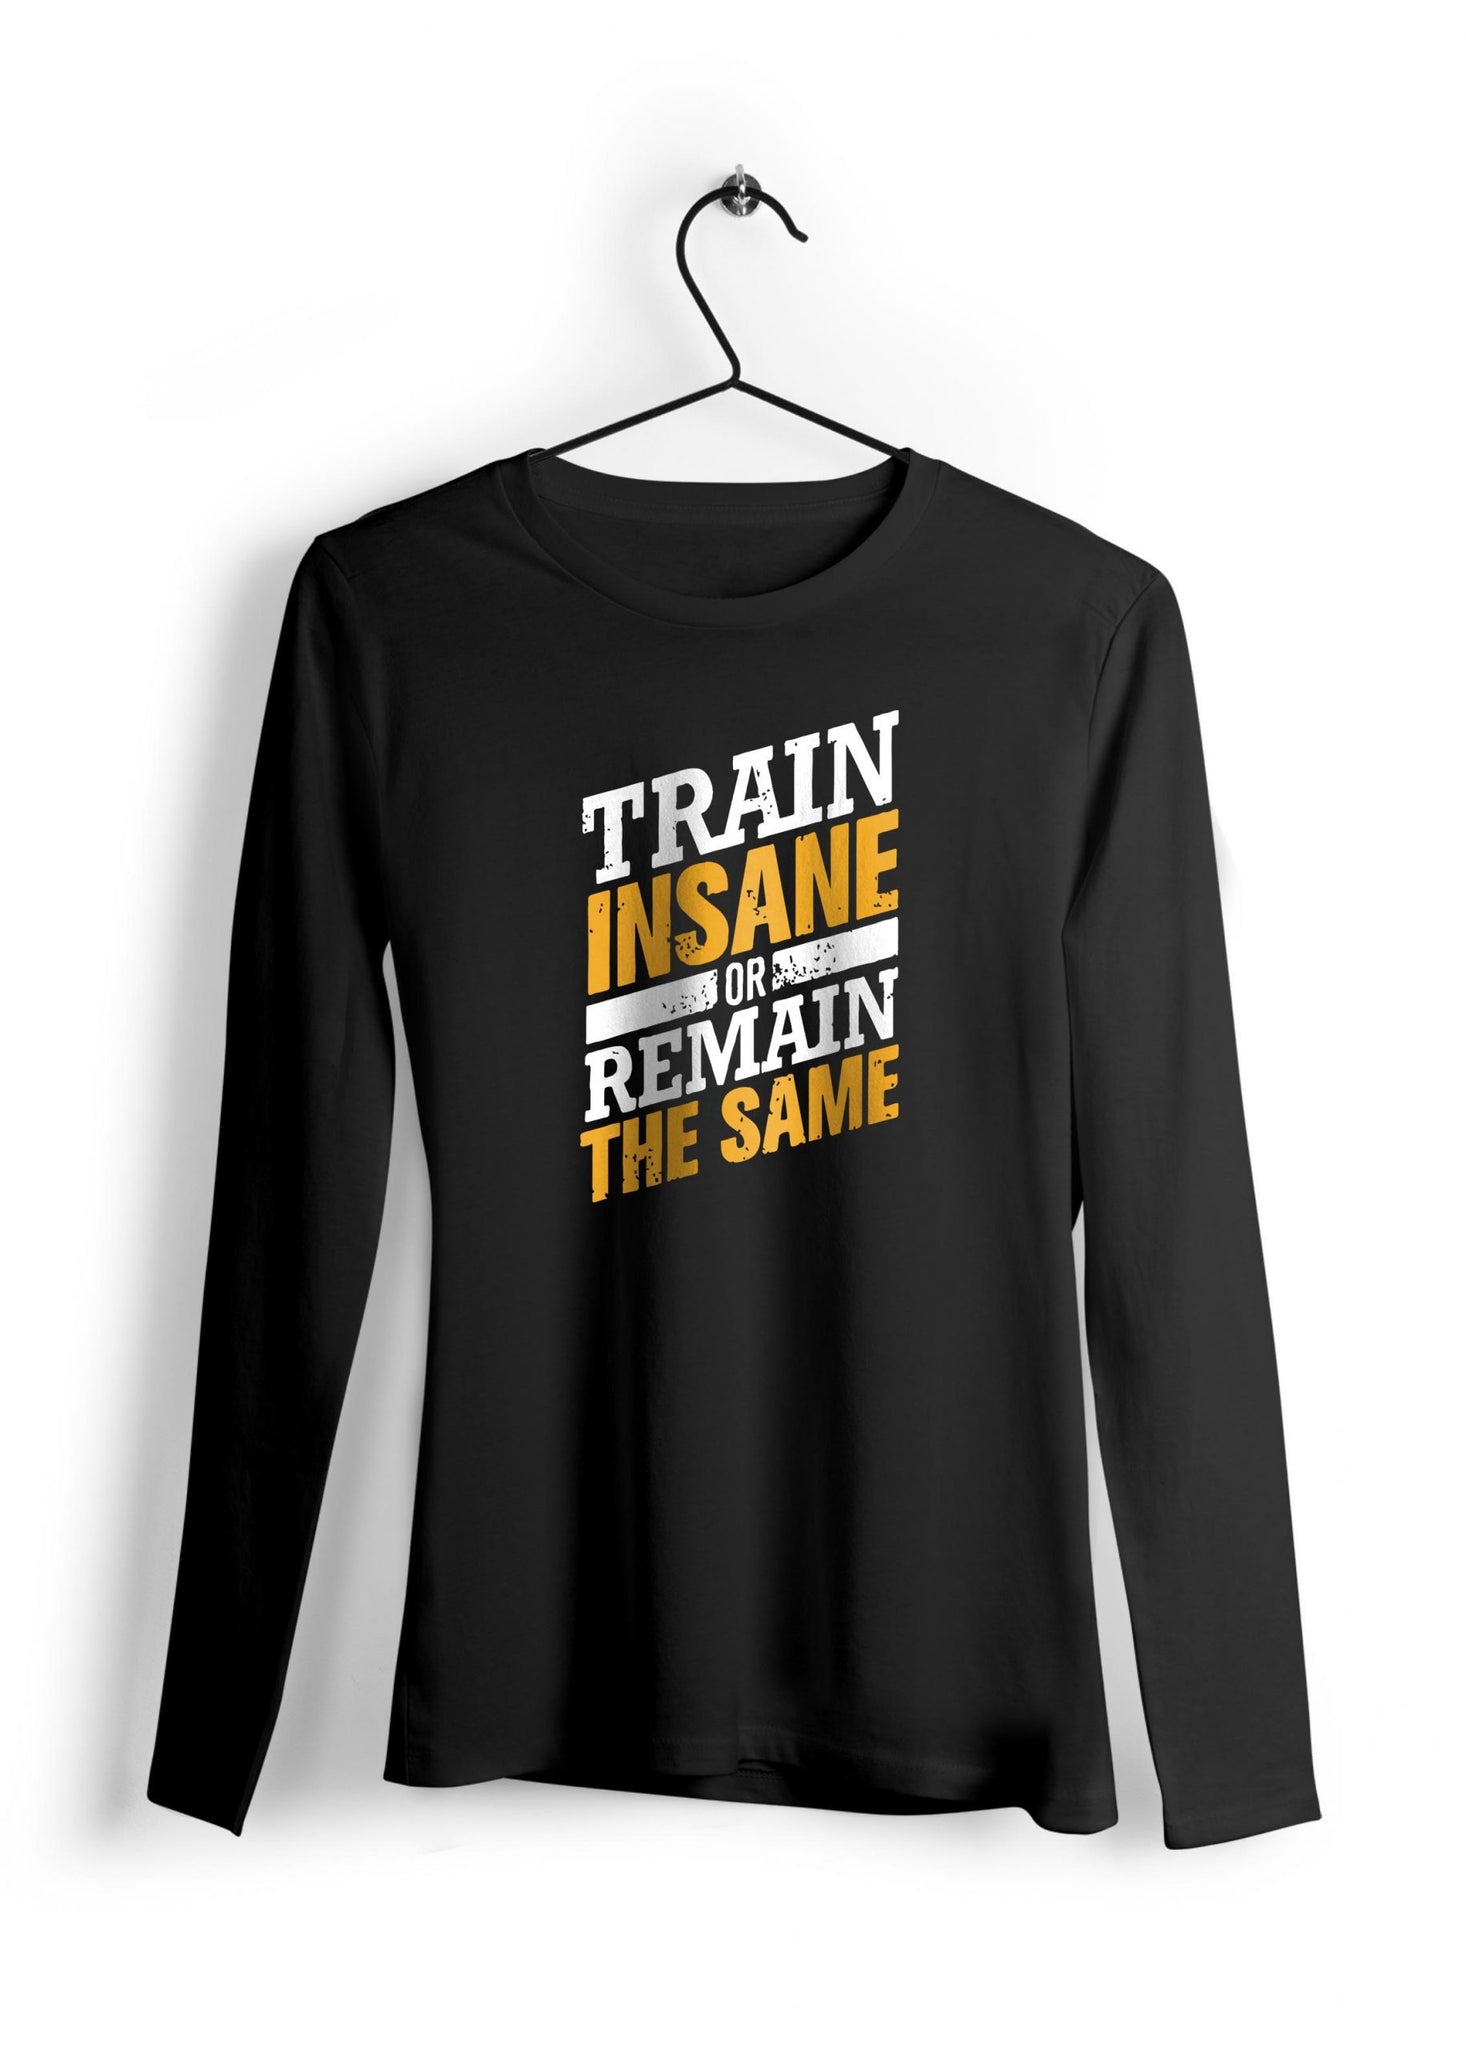 Train insane or remain the same Full Sleeve T-Shirt